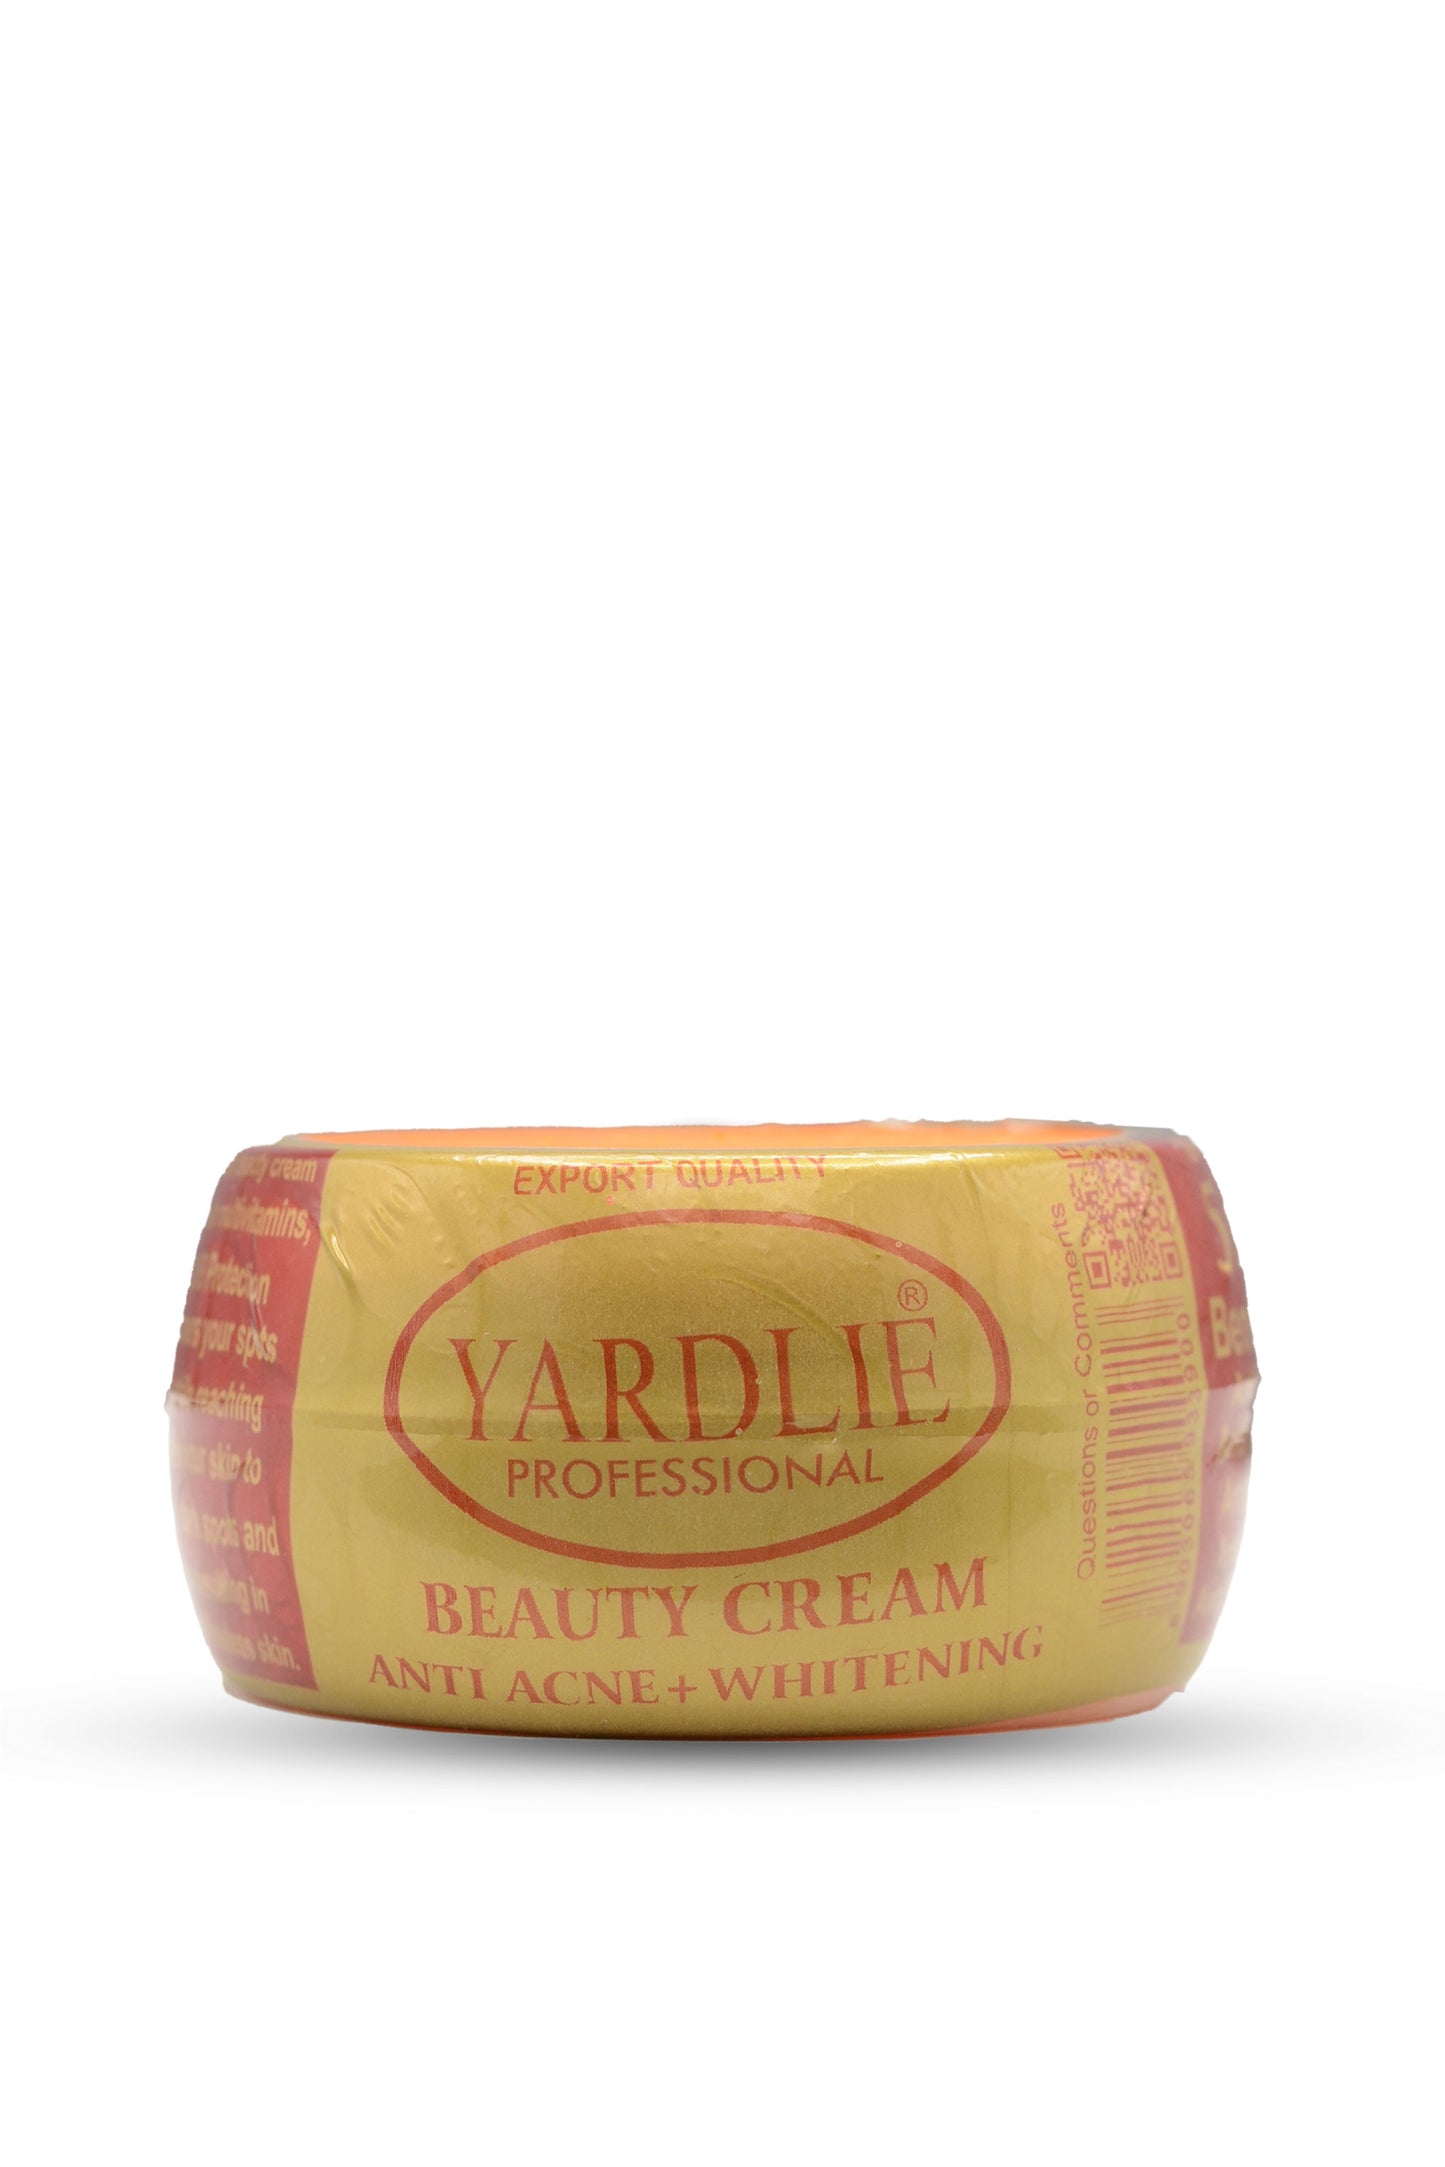 Yardlie Professional Vitamin C Beauty Cream.